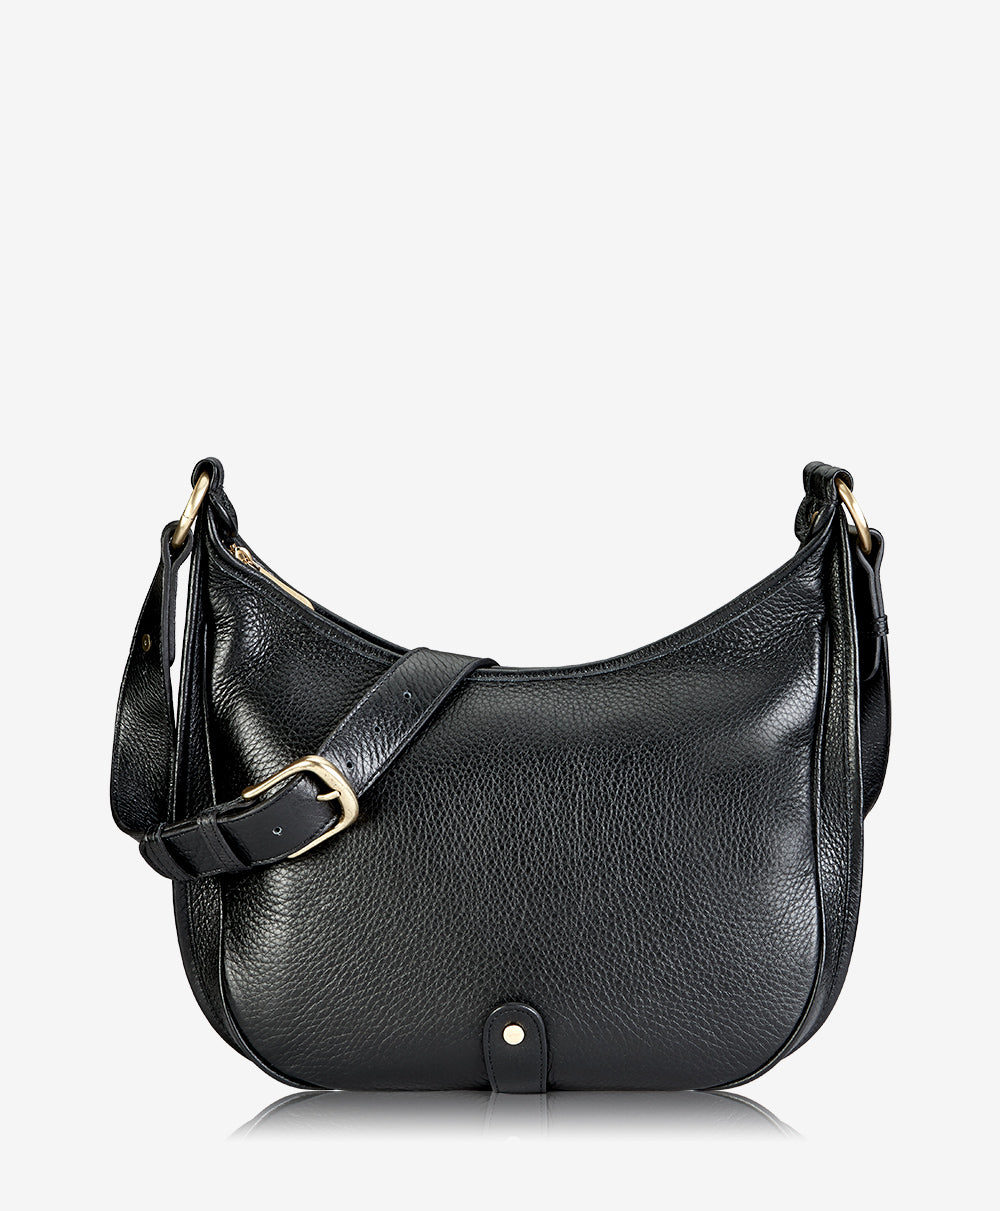 GiGi New York Lauren Saddle Bag Black Pebble Grain Leather